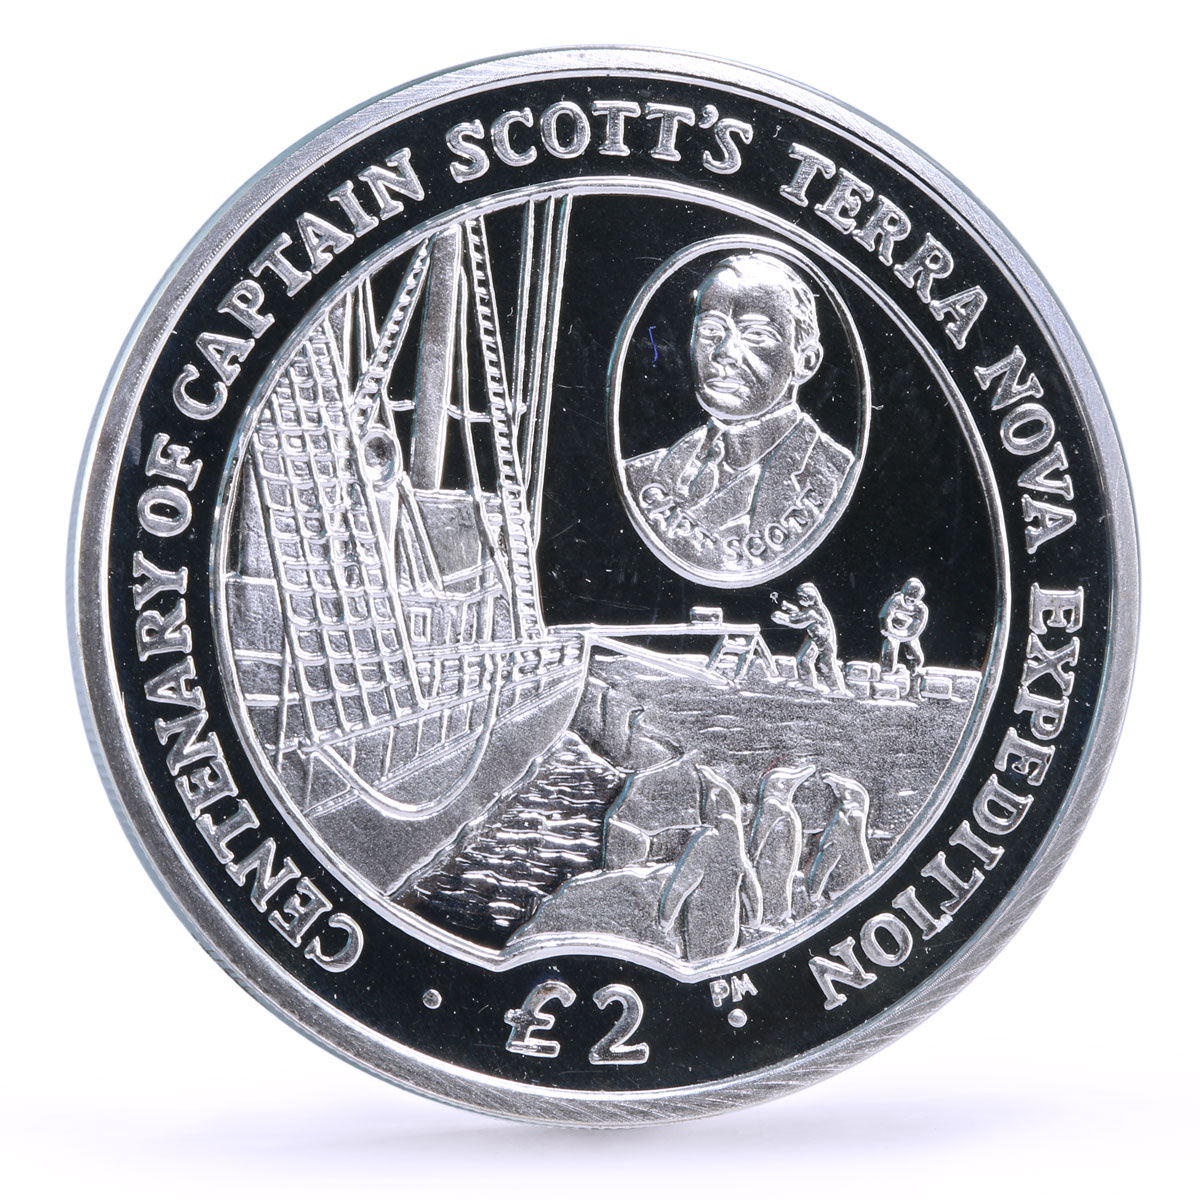 British Antarctic 2 pounds Scott's Terra Nova Expedition Ship silver coin 2012